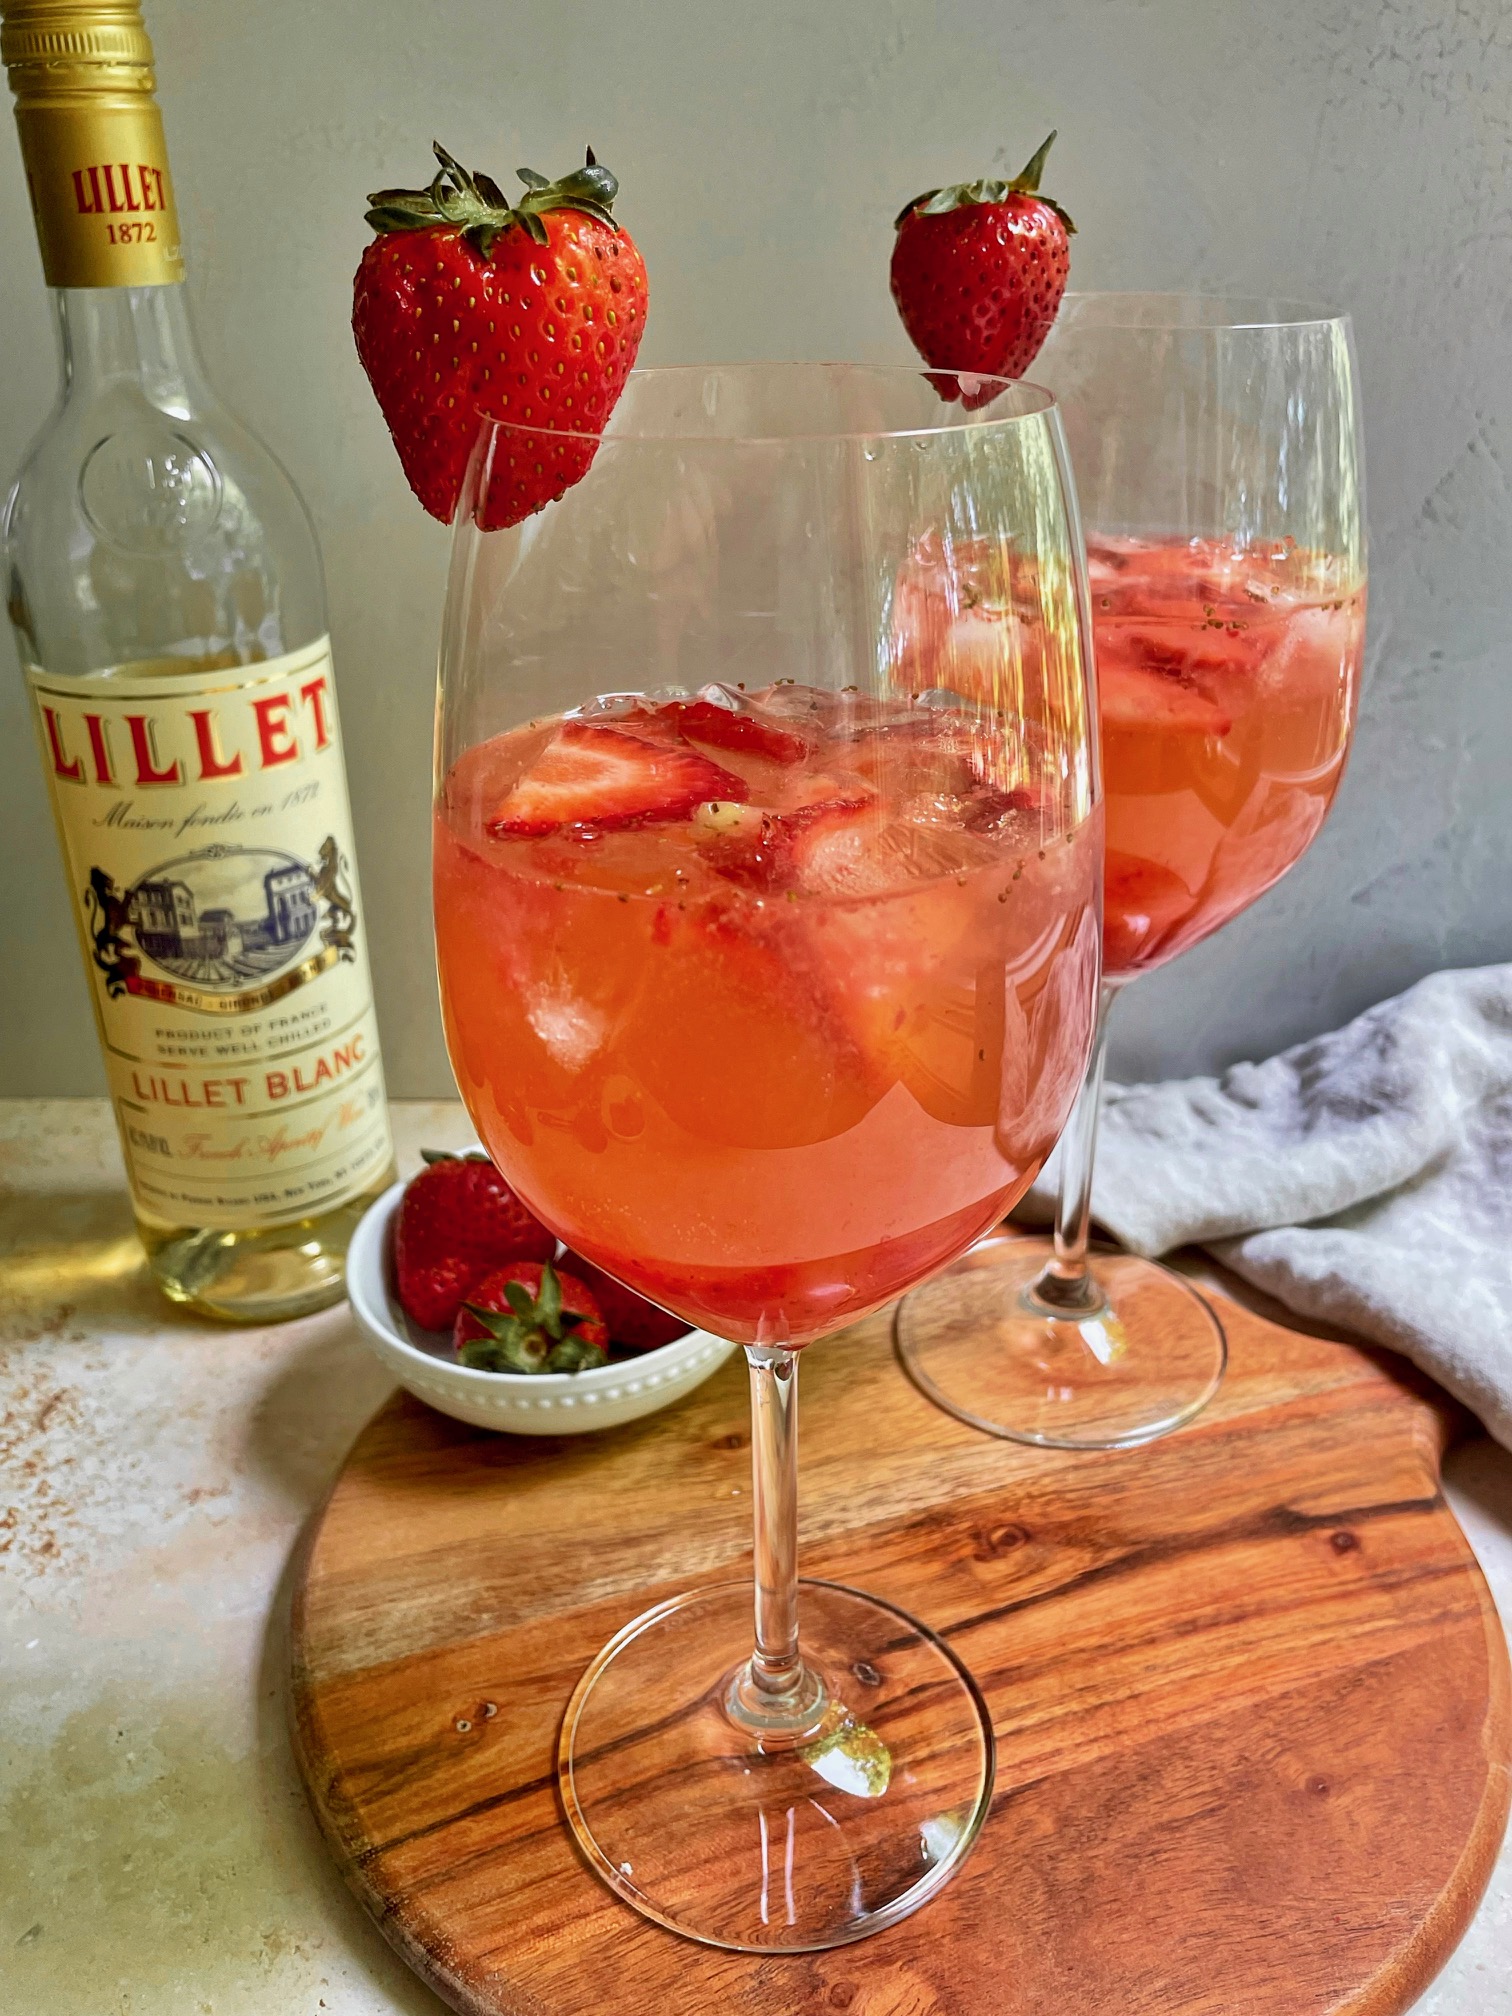 Two strawberry spritz cocktails.